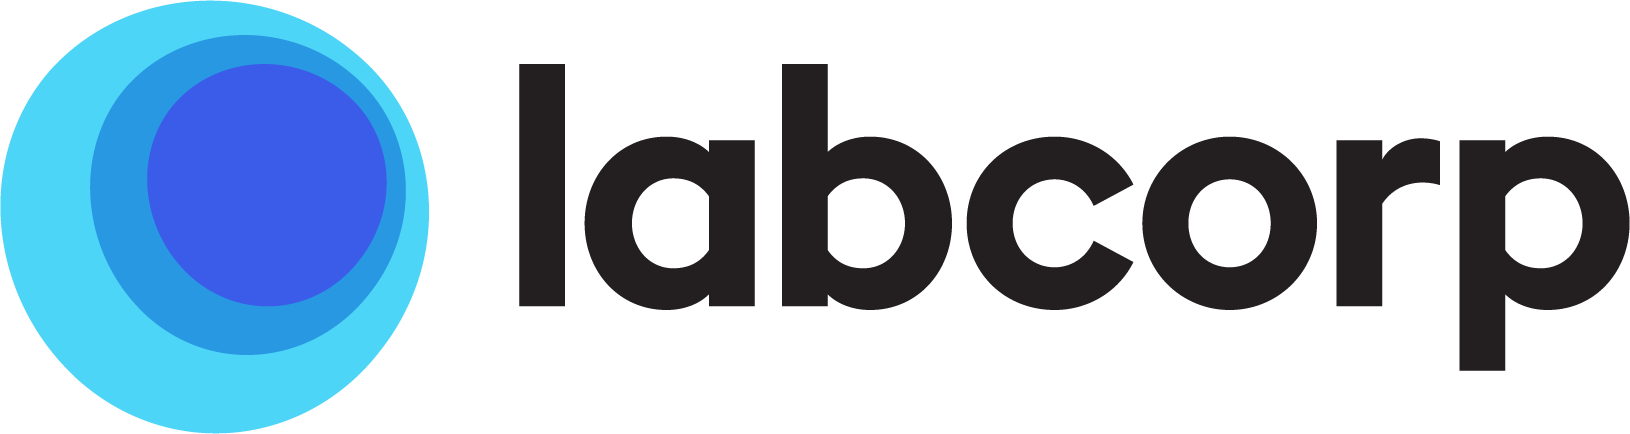 Laboratory Corporation of America Holdings Company Logo